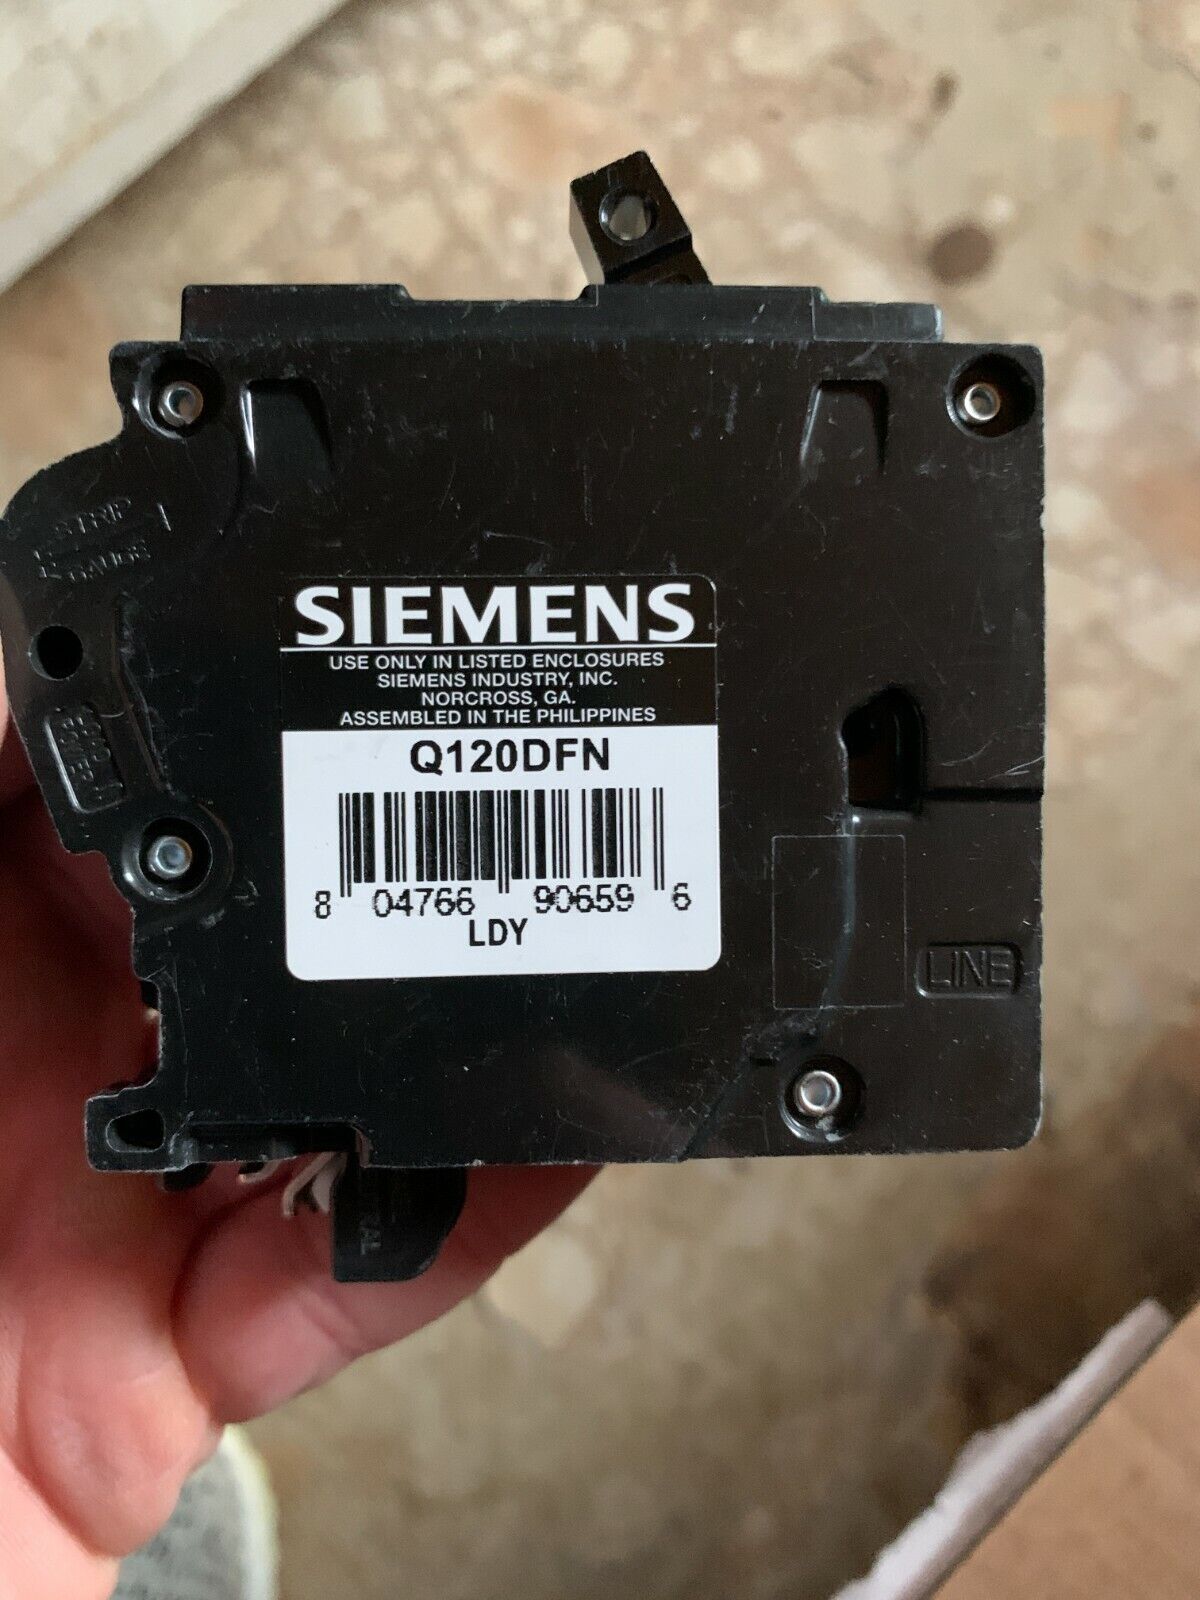 Siemens Q120DFN Arc-Fault/Ground-Fault Dual Function Circuit Breaker